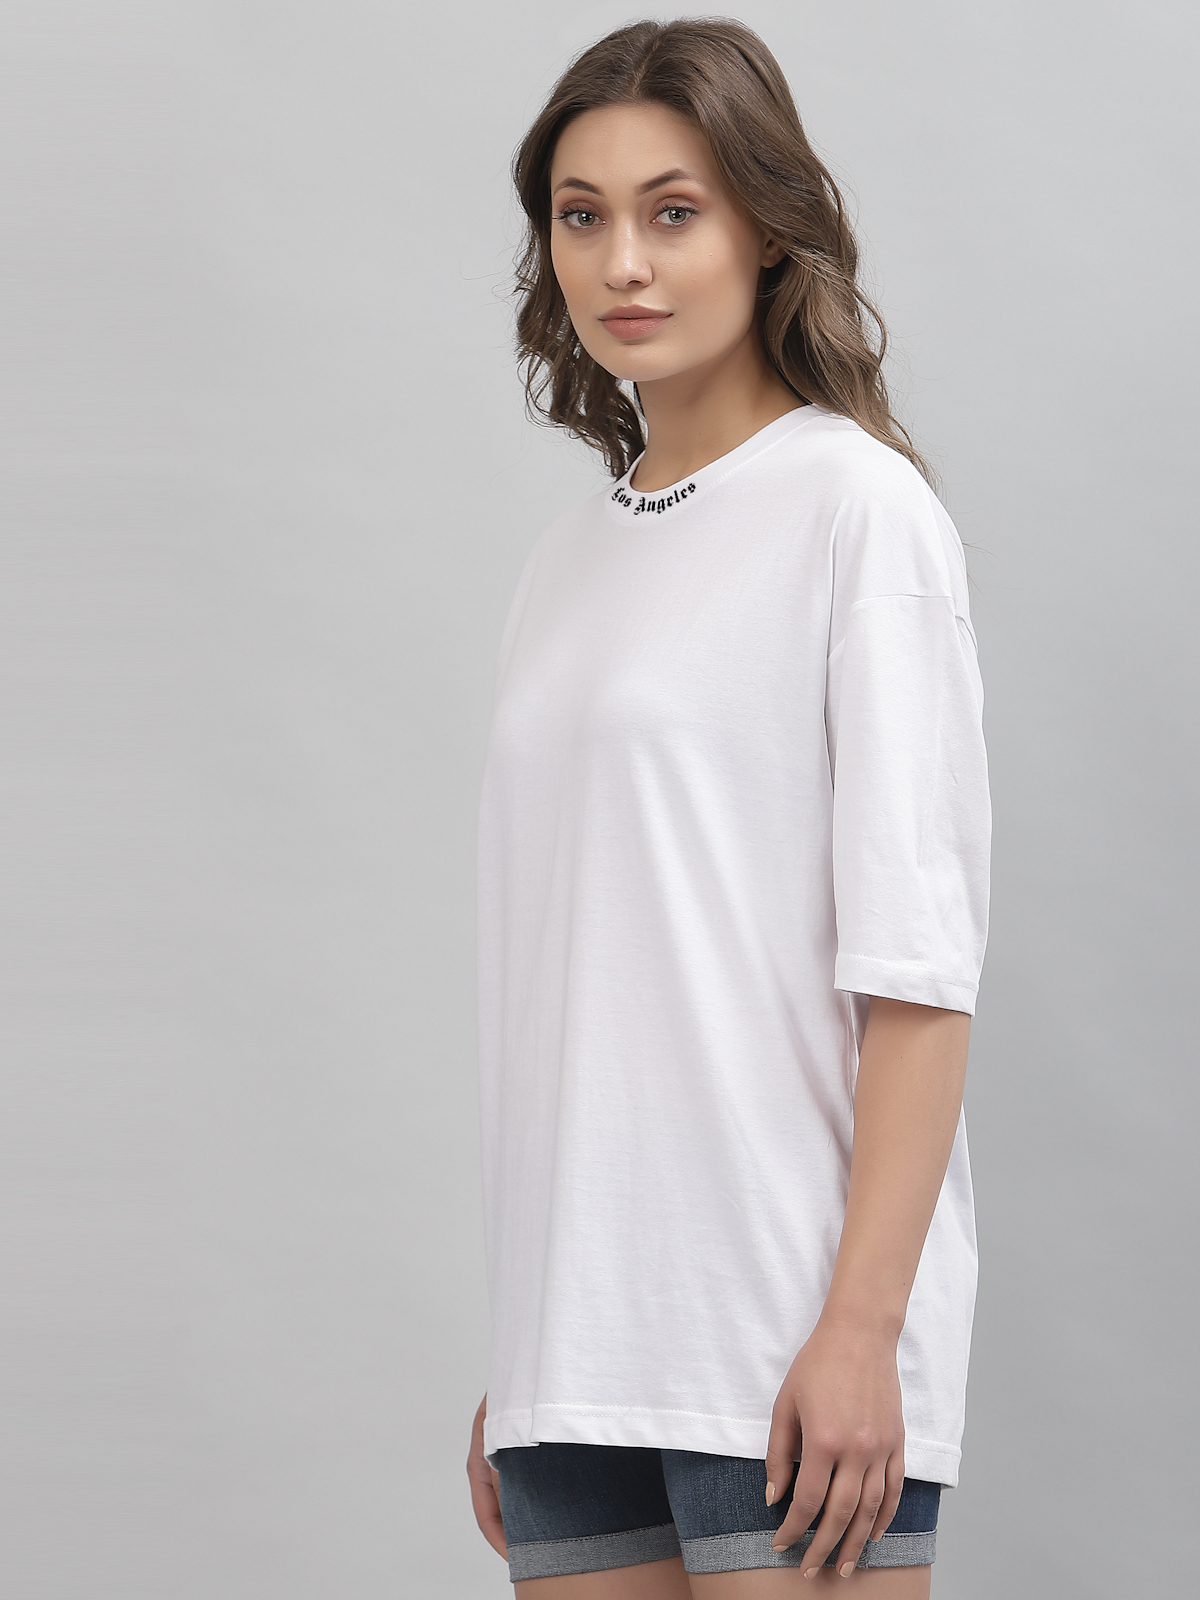 The Oversized White T-Shirt: A Timeless Wardrobe Staple